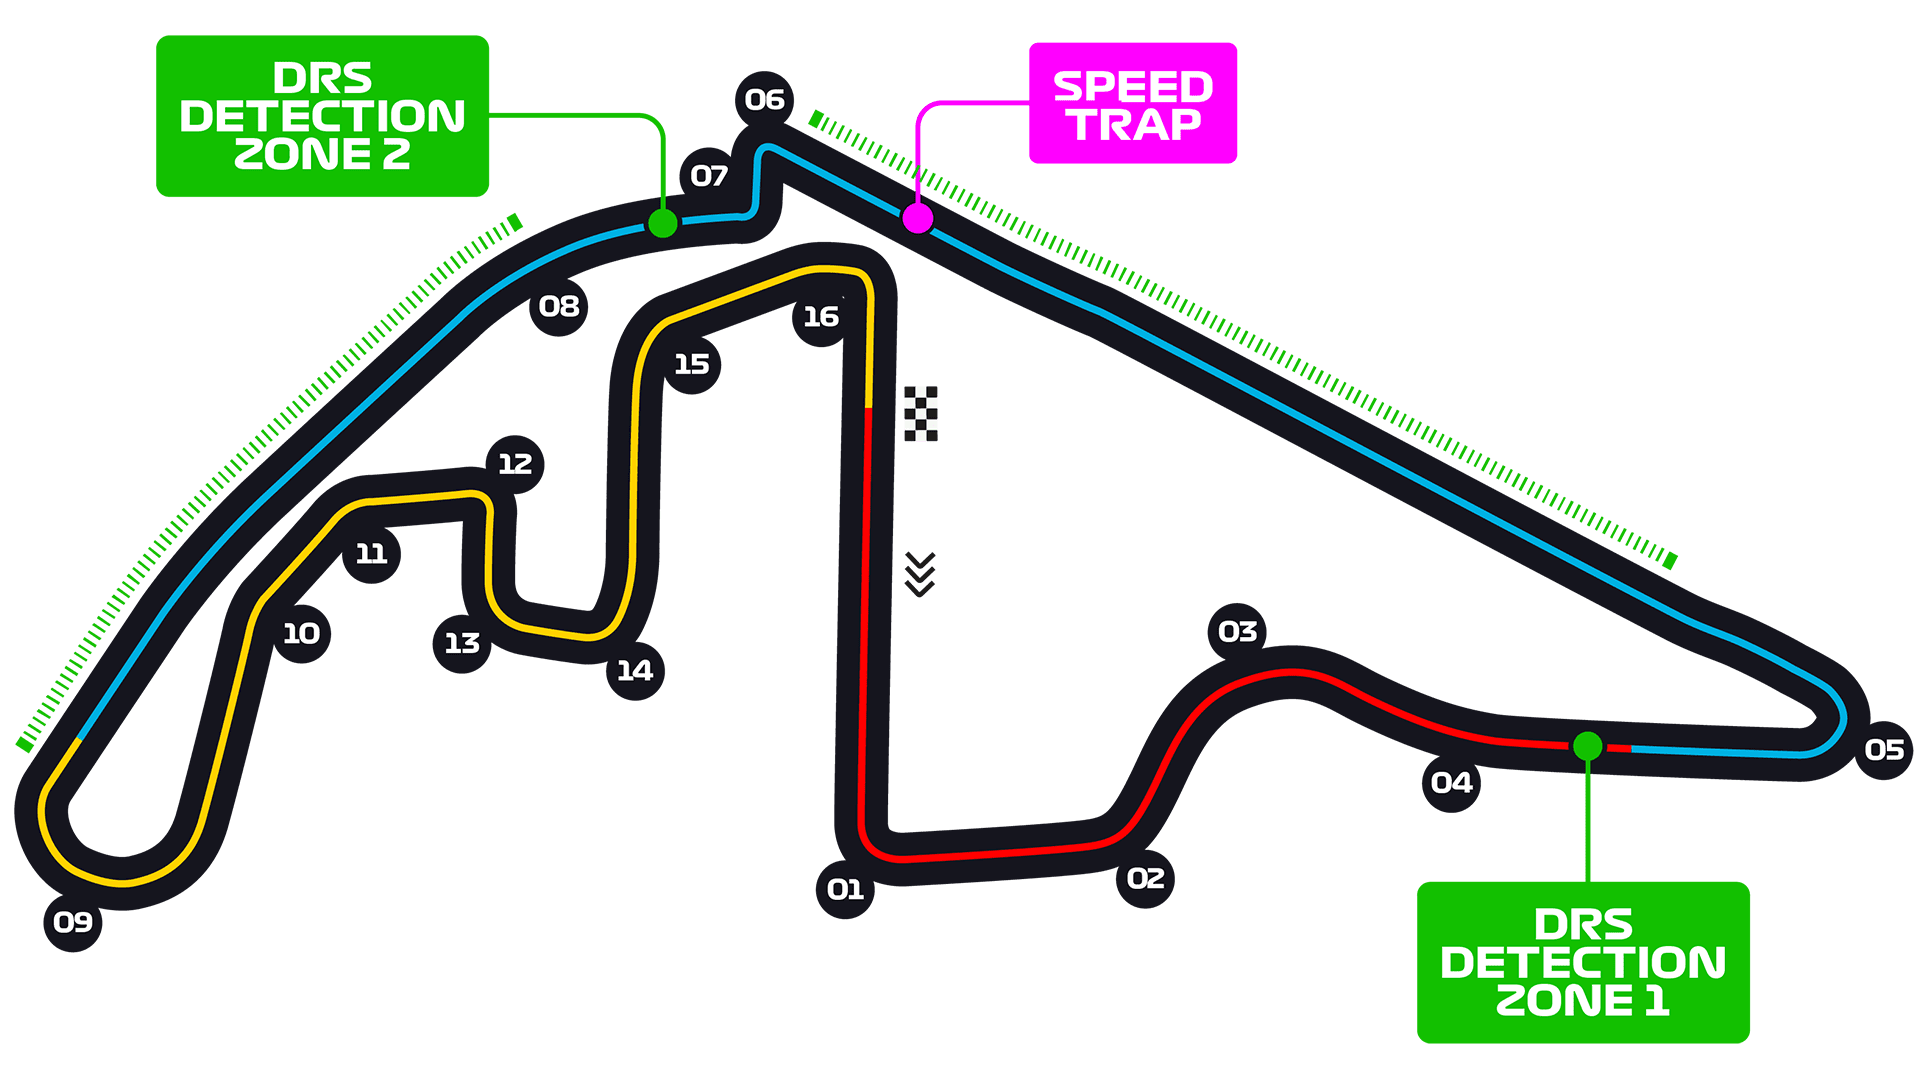 F1 Abu Dhabi Grand Prix (Yas Marina Circuit) print by Michael